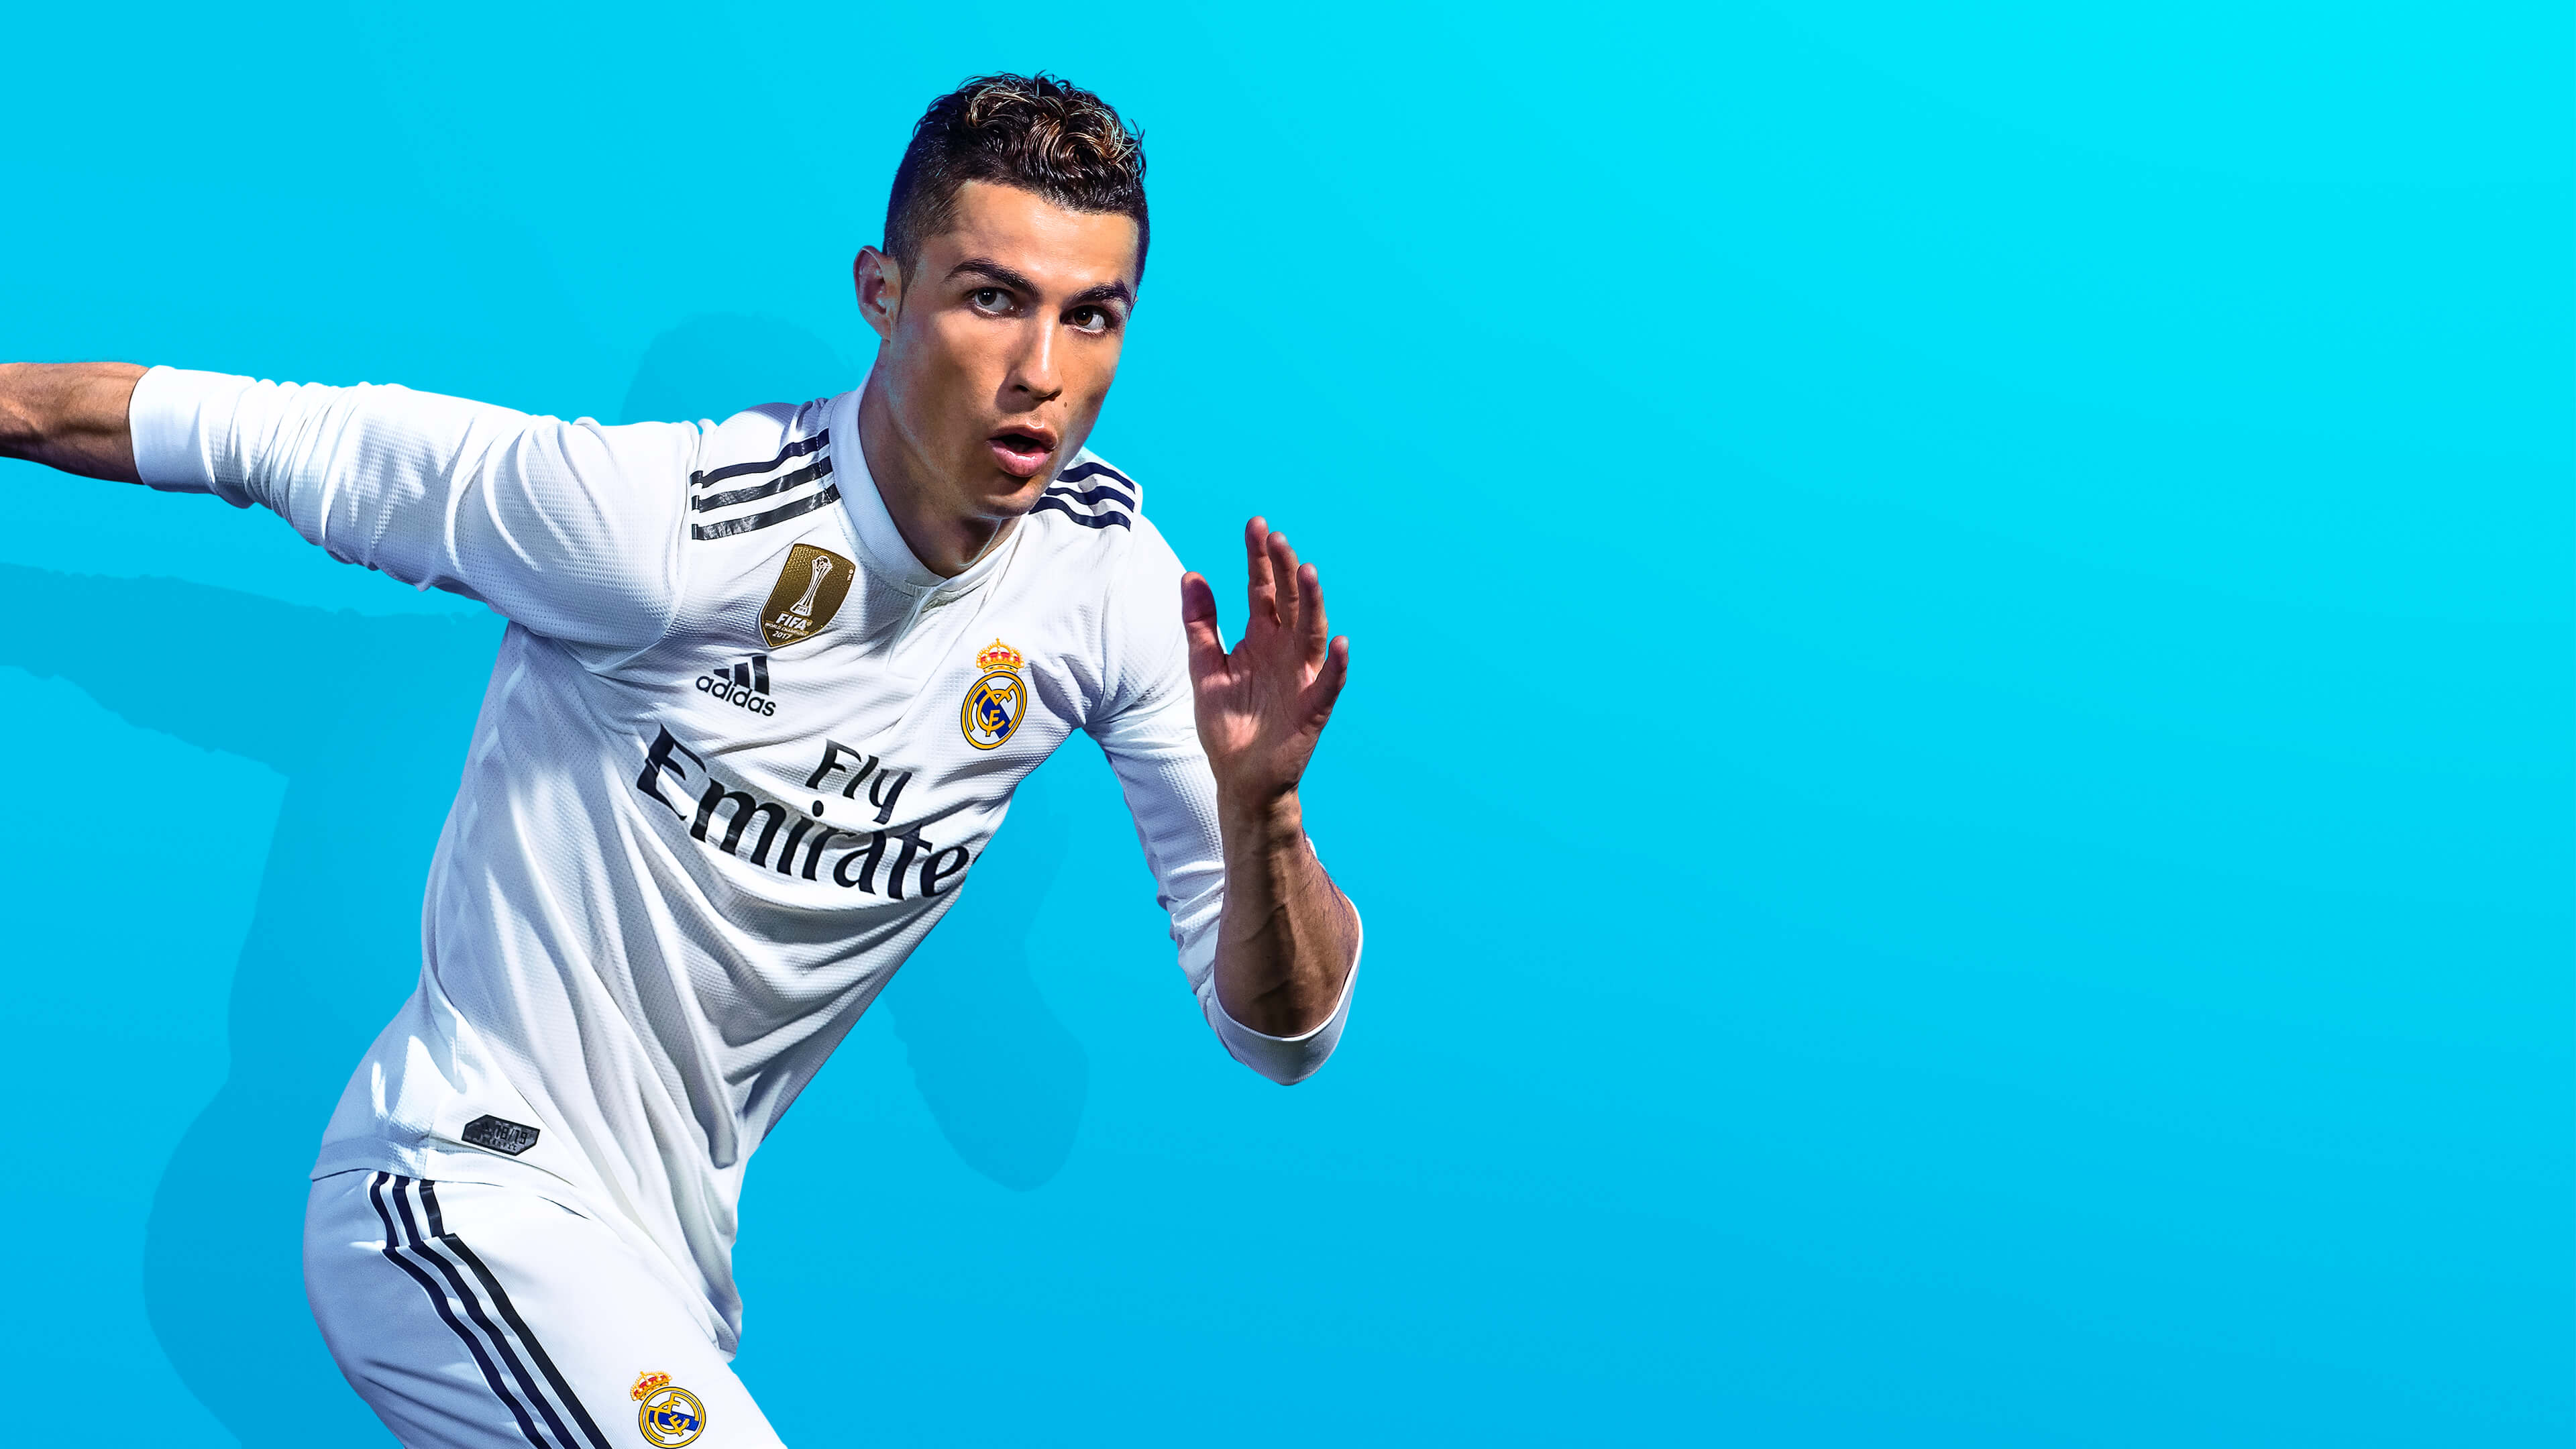 Cristiano Ronaldo in FIFA 19 4K Wallpapers